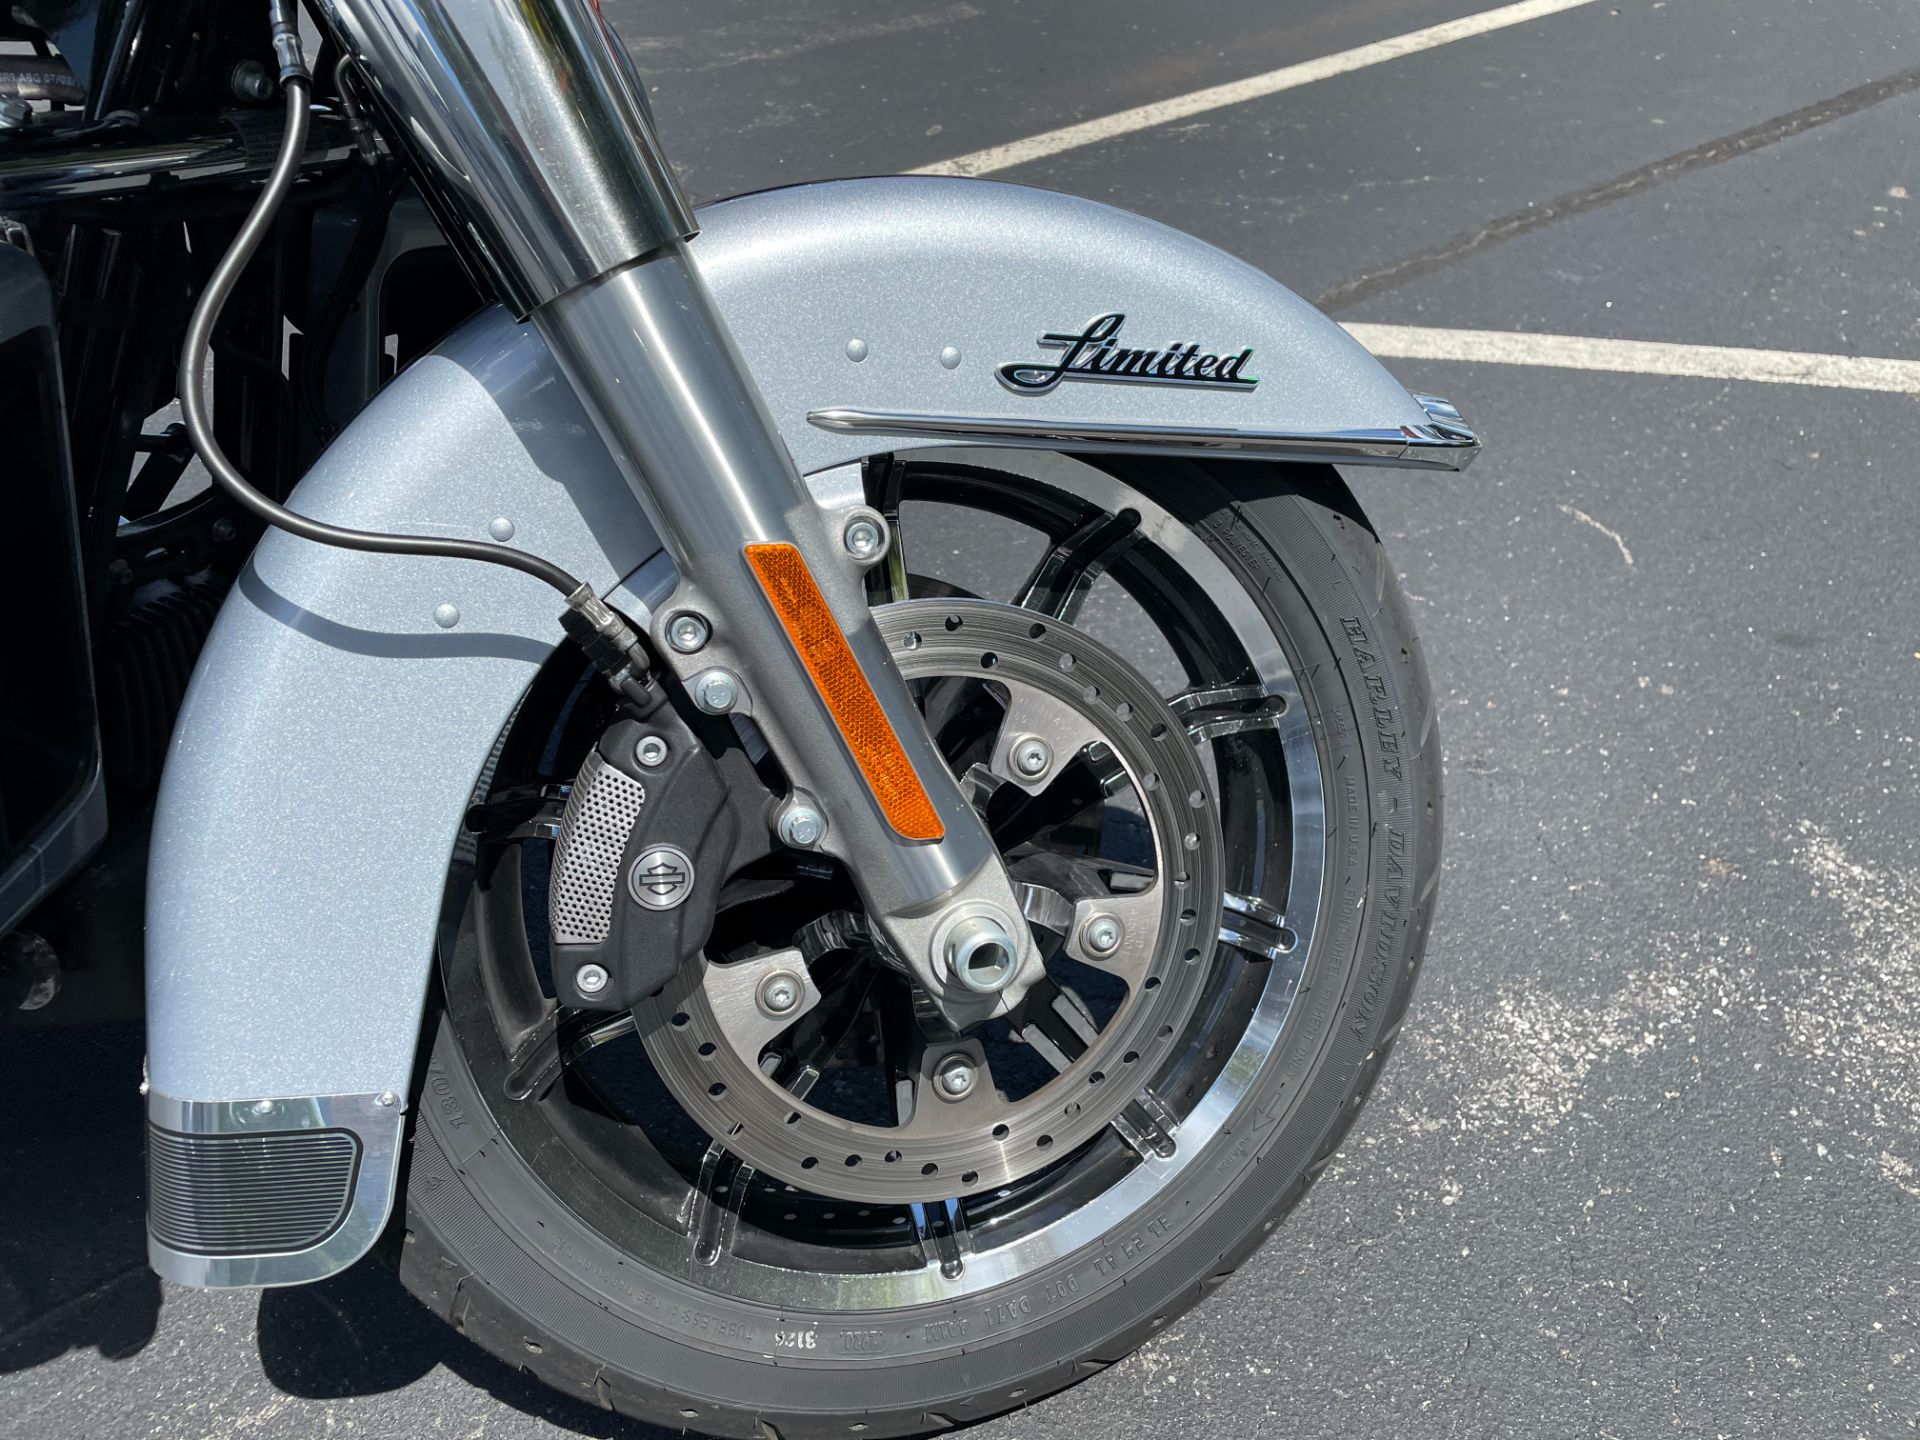 2019 Harley-Davidson Ultra Limited in Lynchburg, Virginia - Photo 11